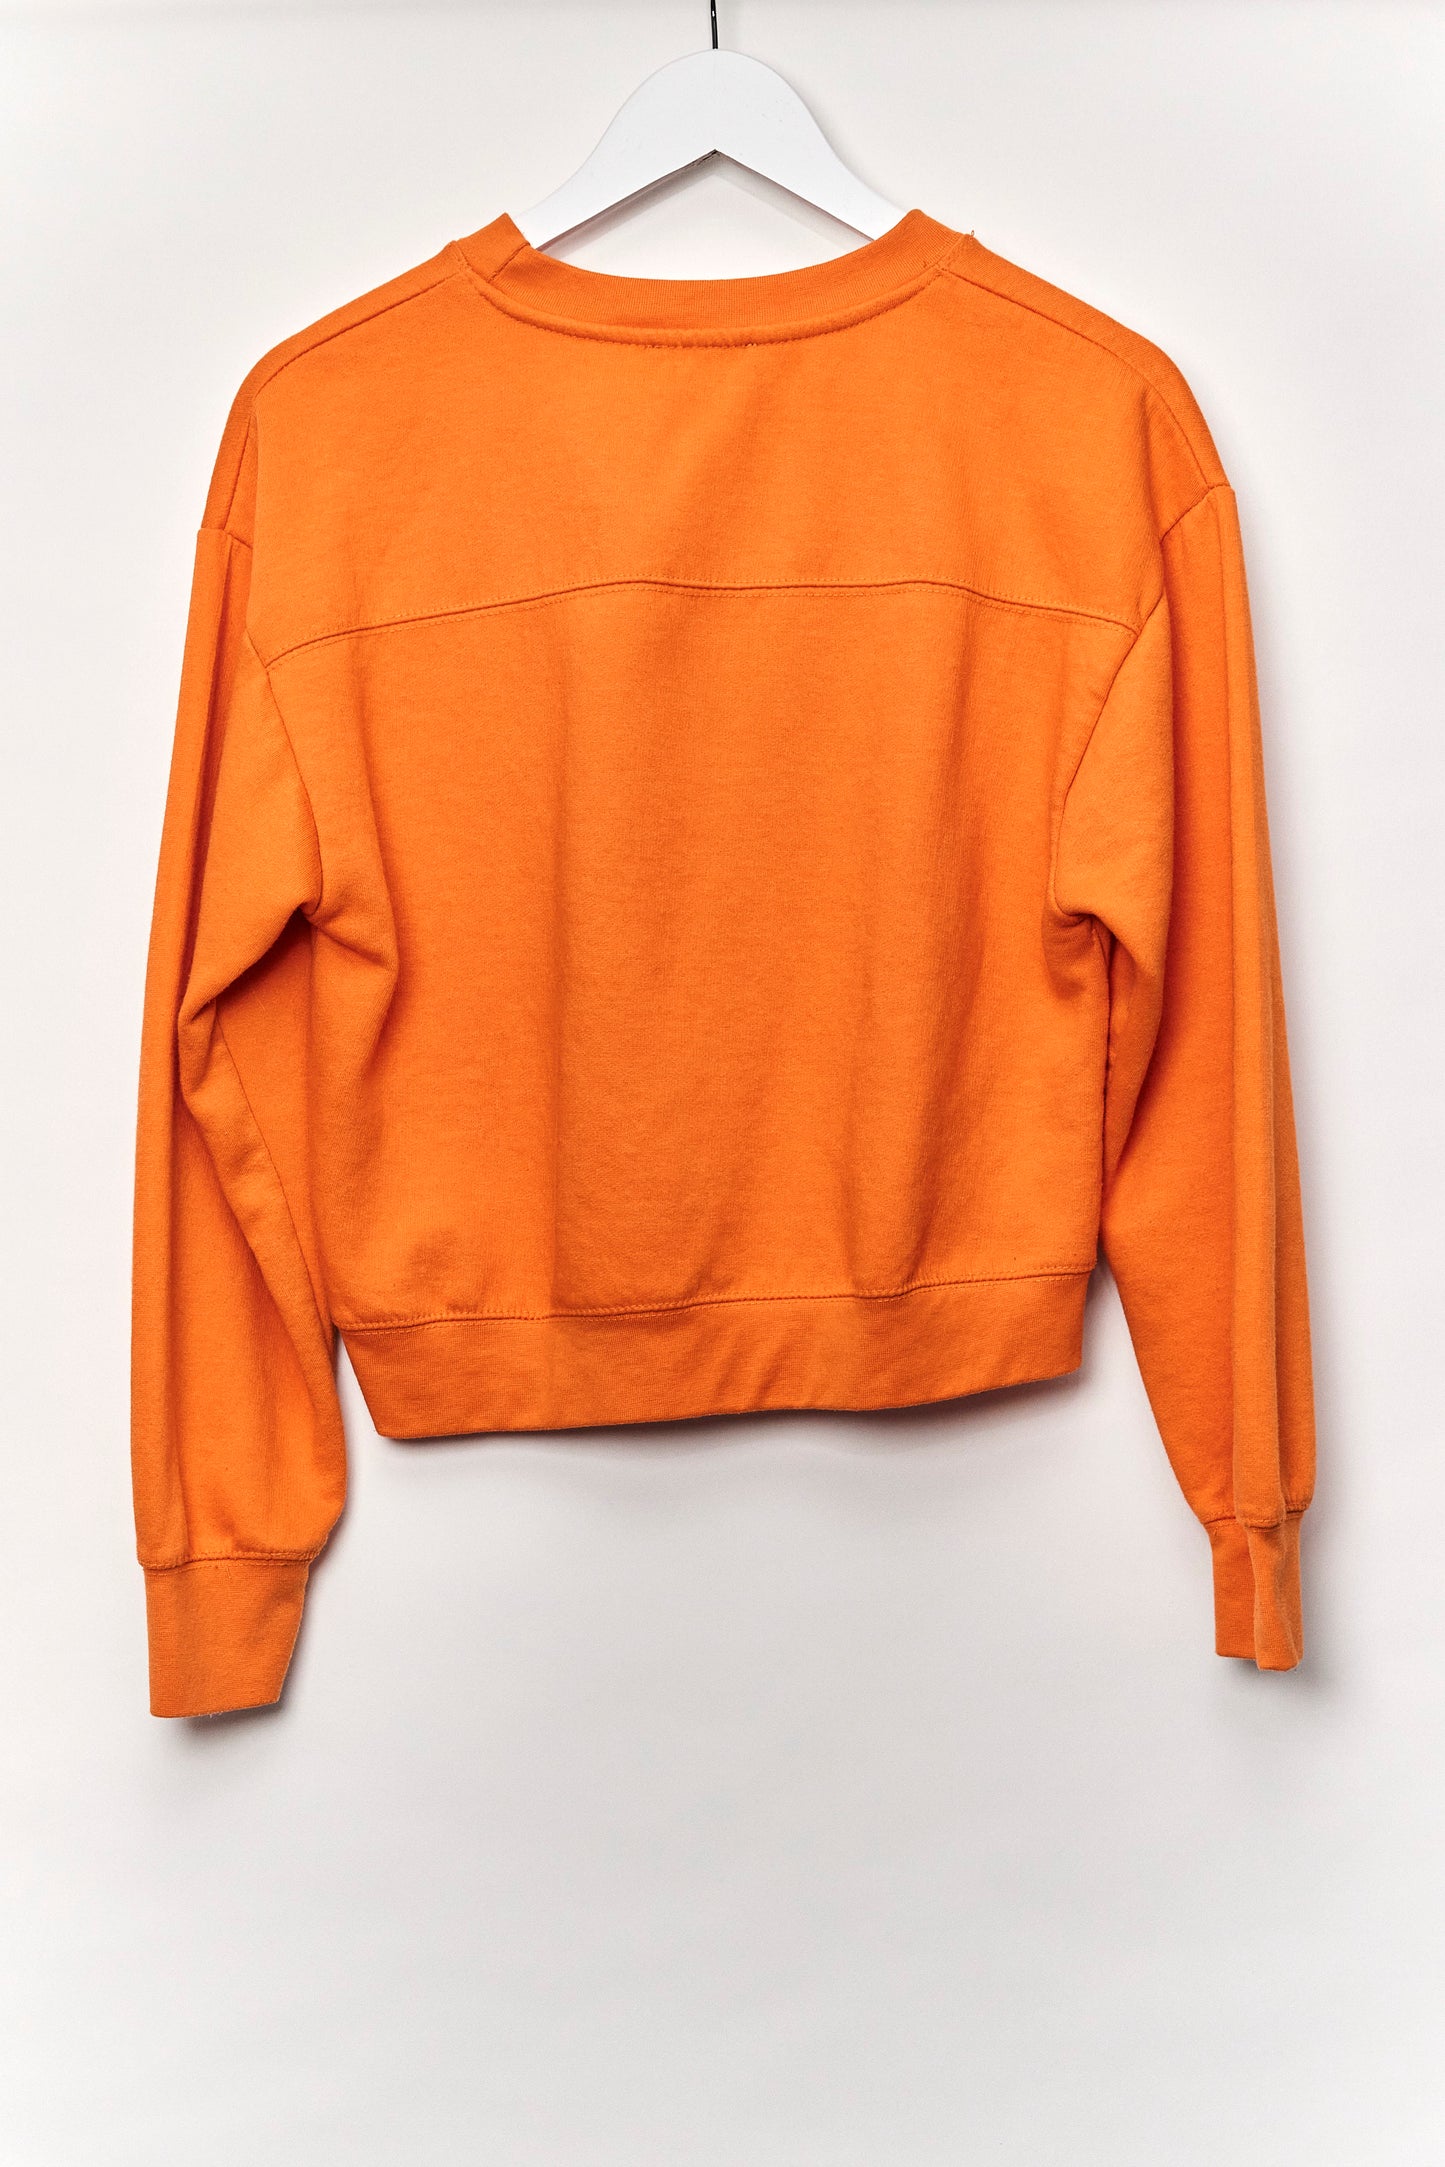 Womens Orange Sweatshirt Size Small